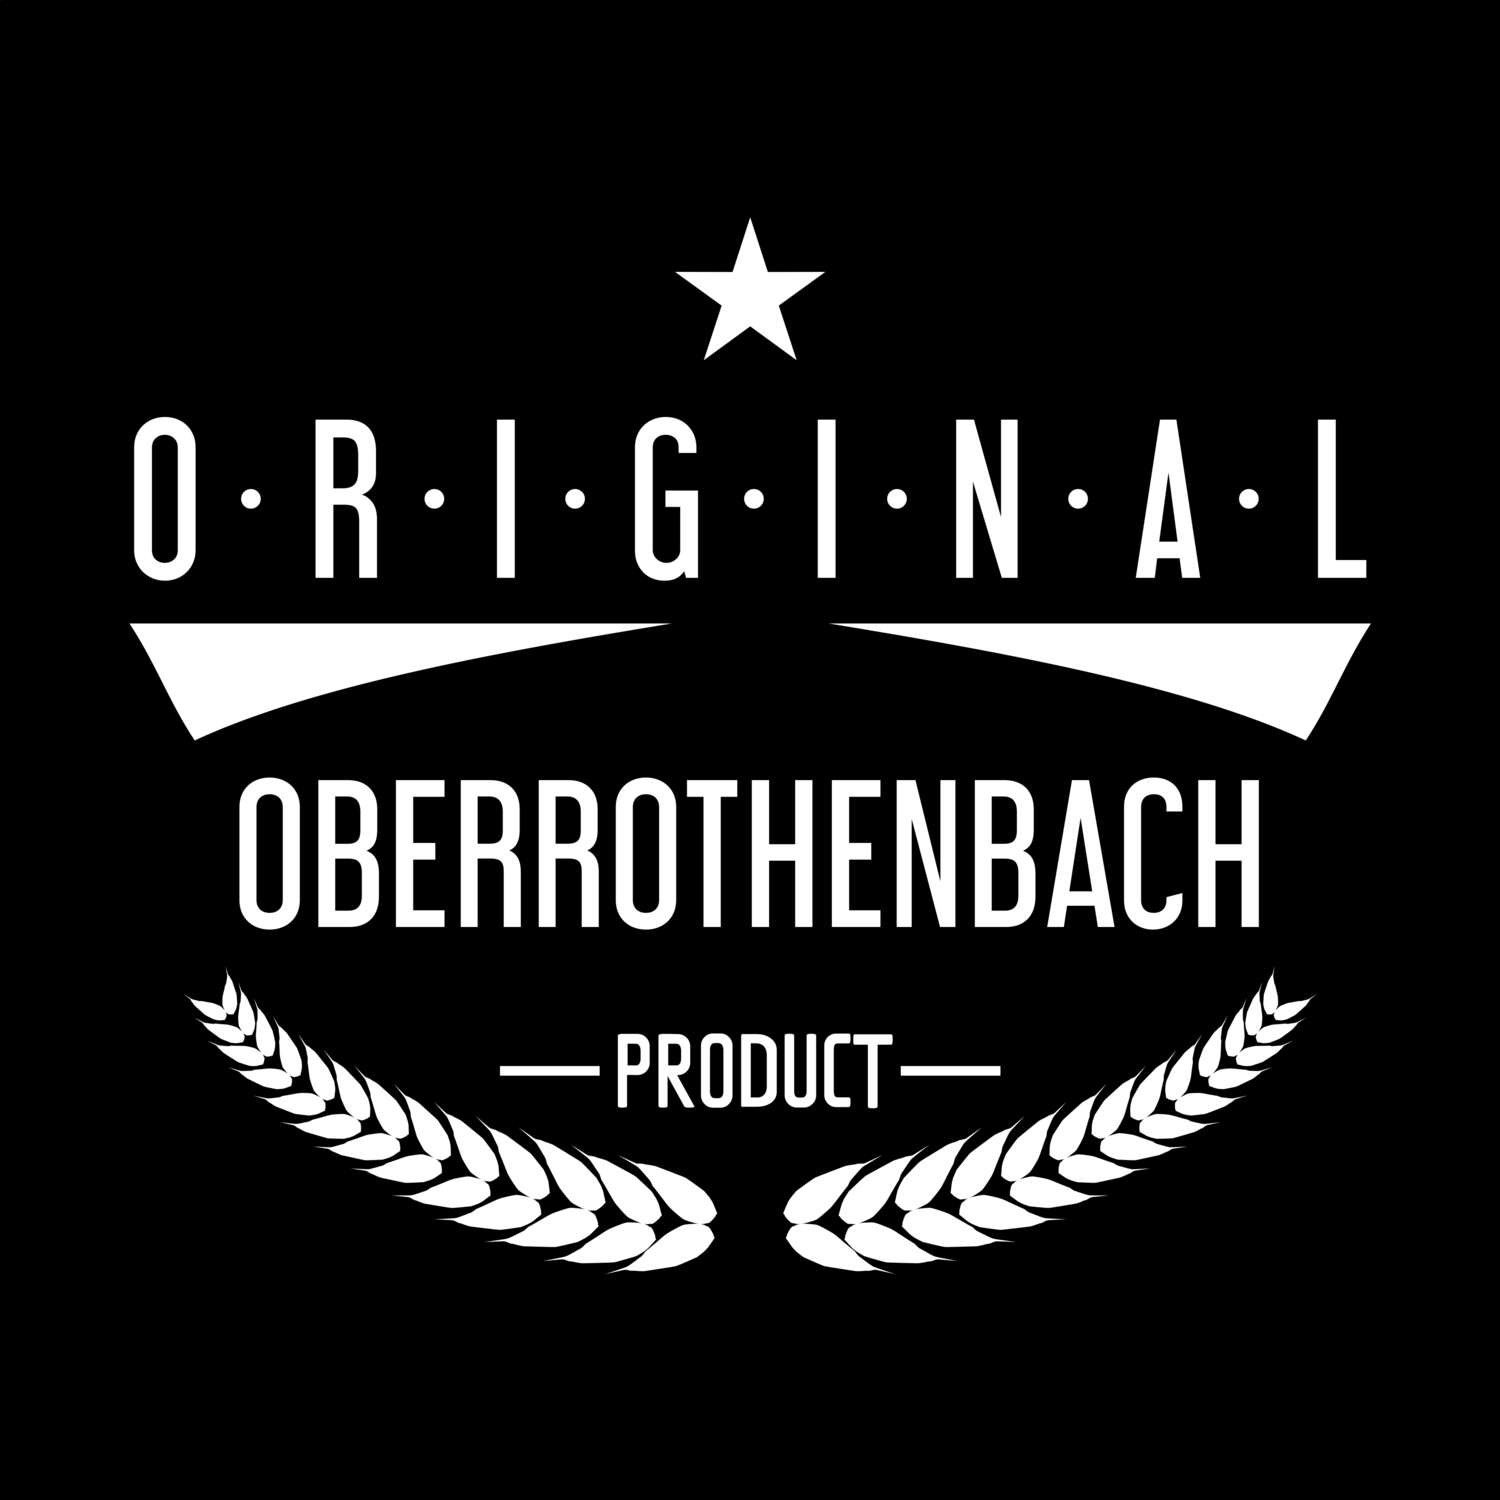 Oberrothenbach T-Shirt »Original Product«